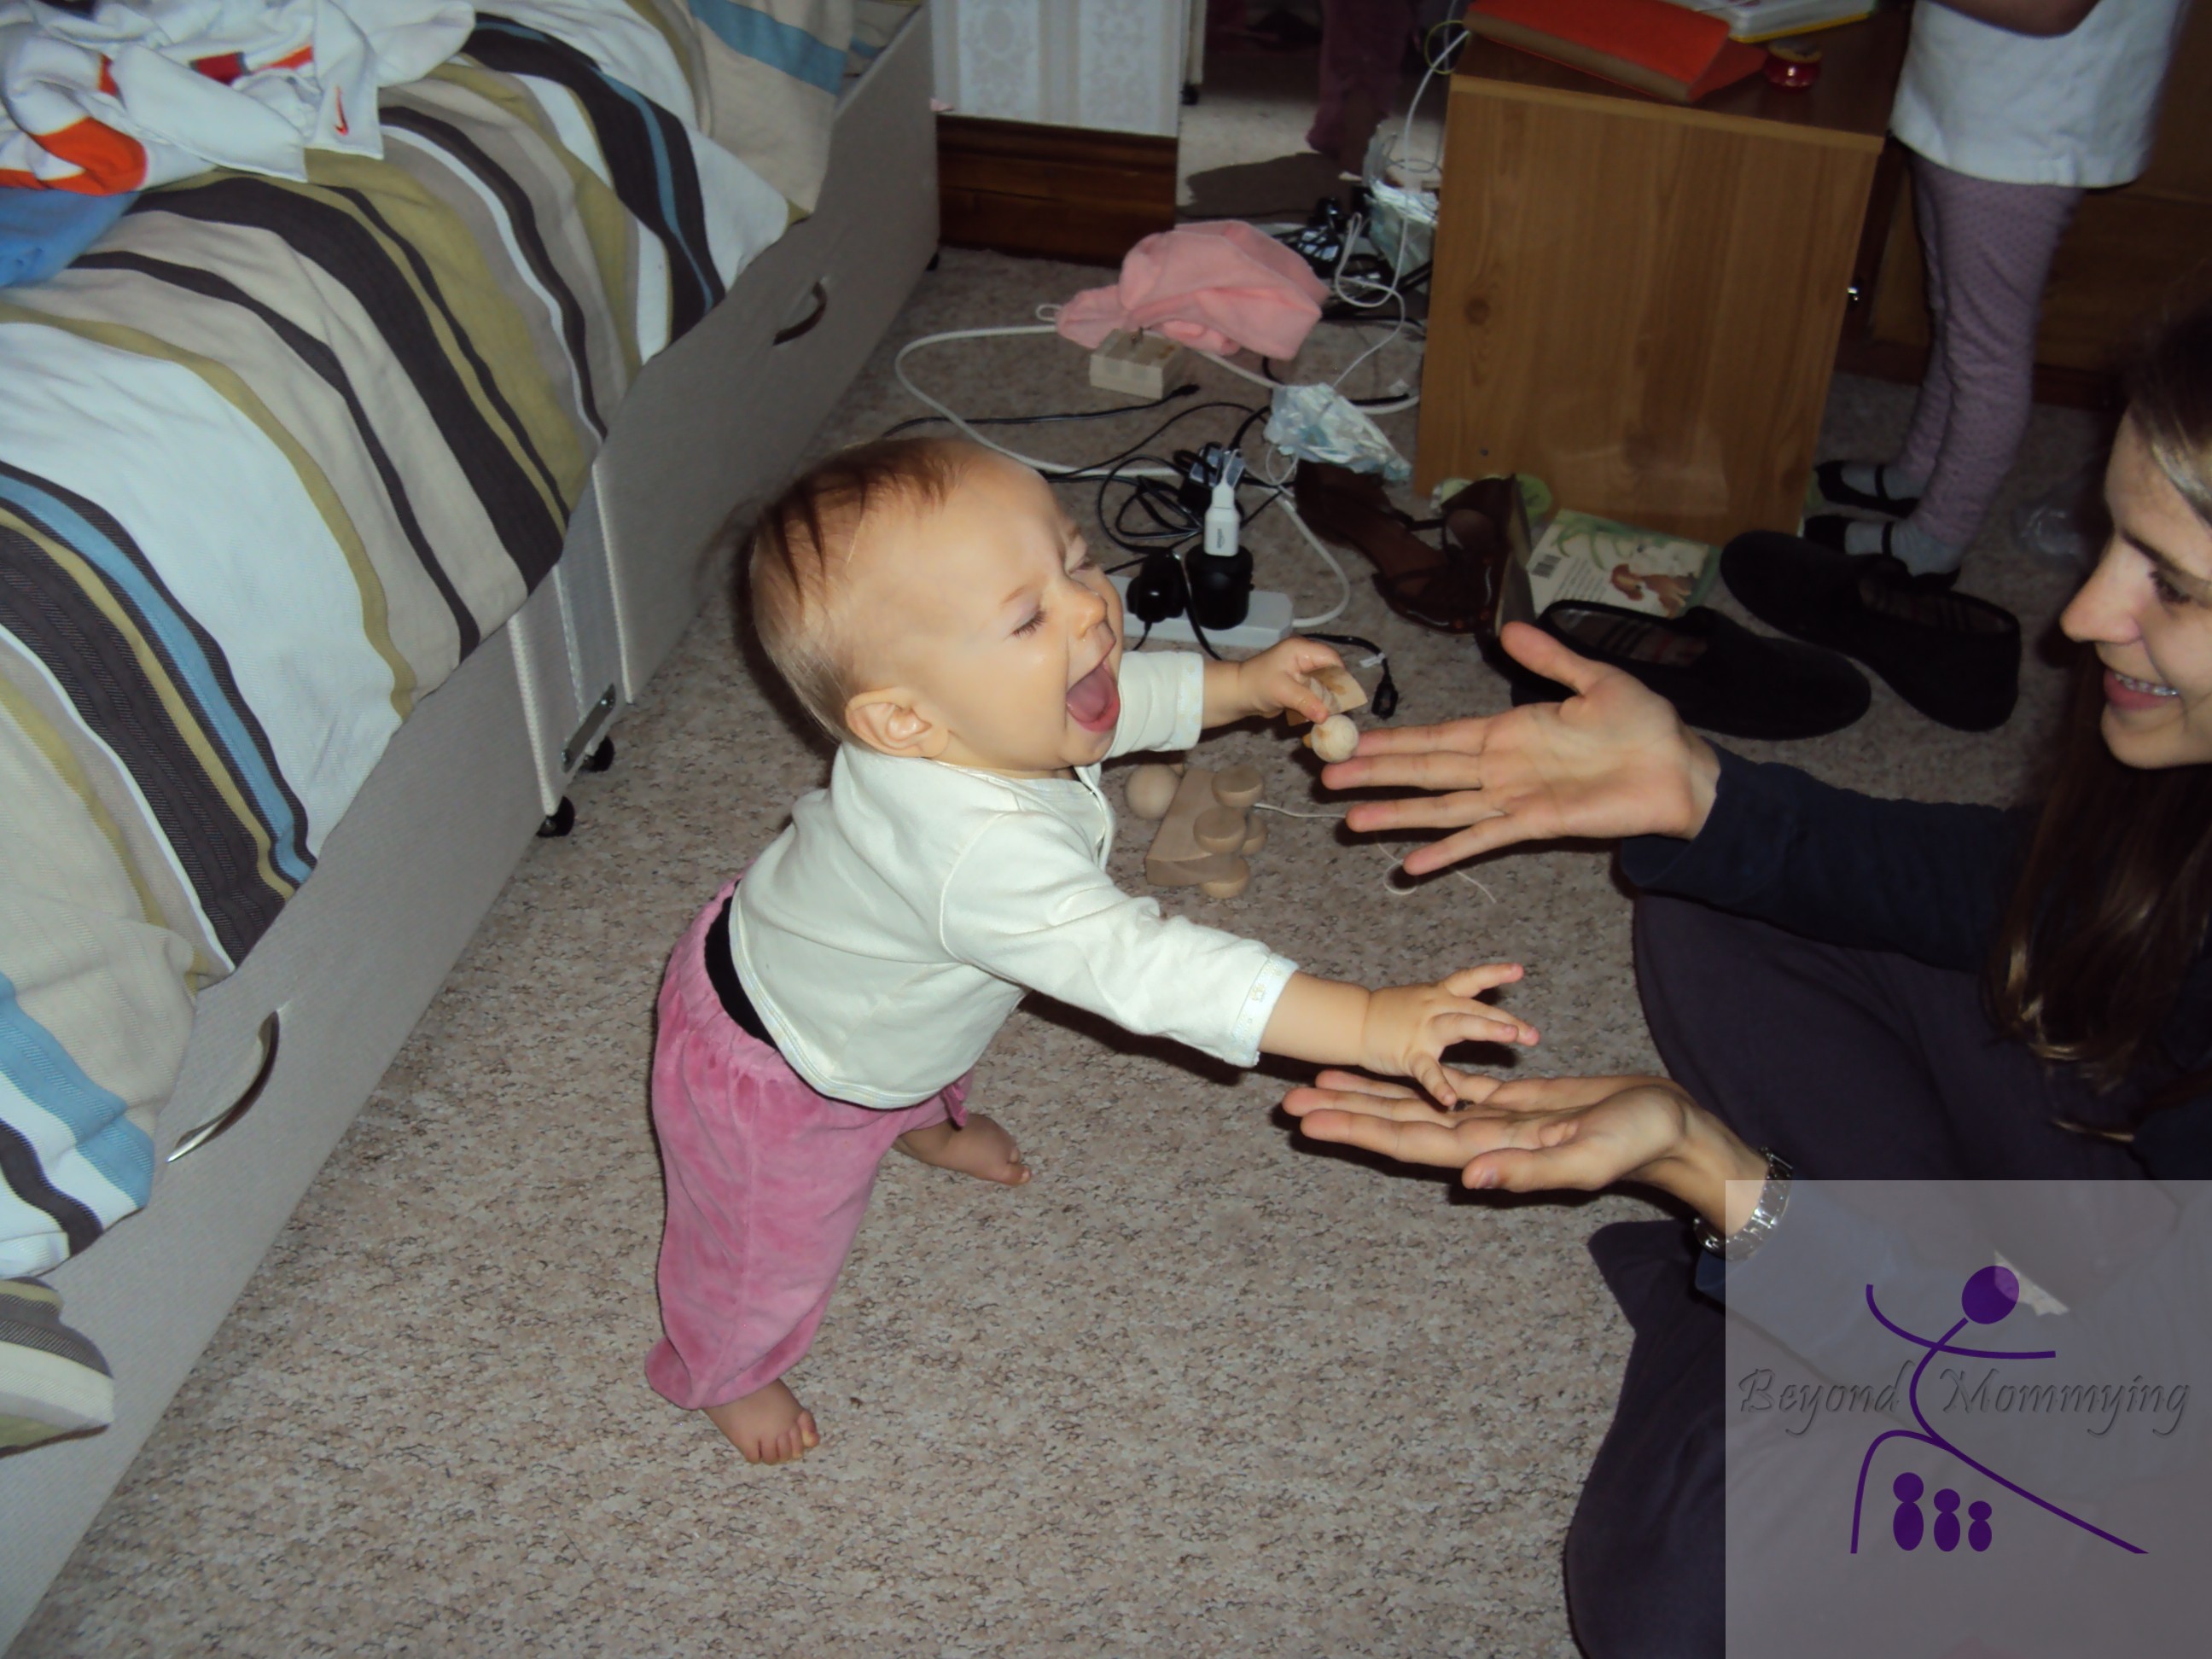 Baby's Movement Milestones - Beyond Mommying